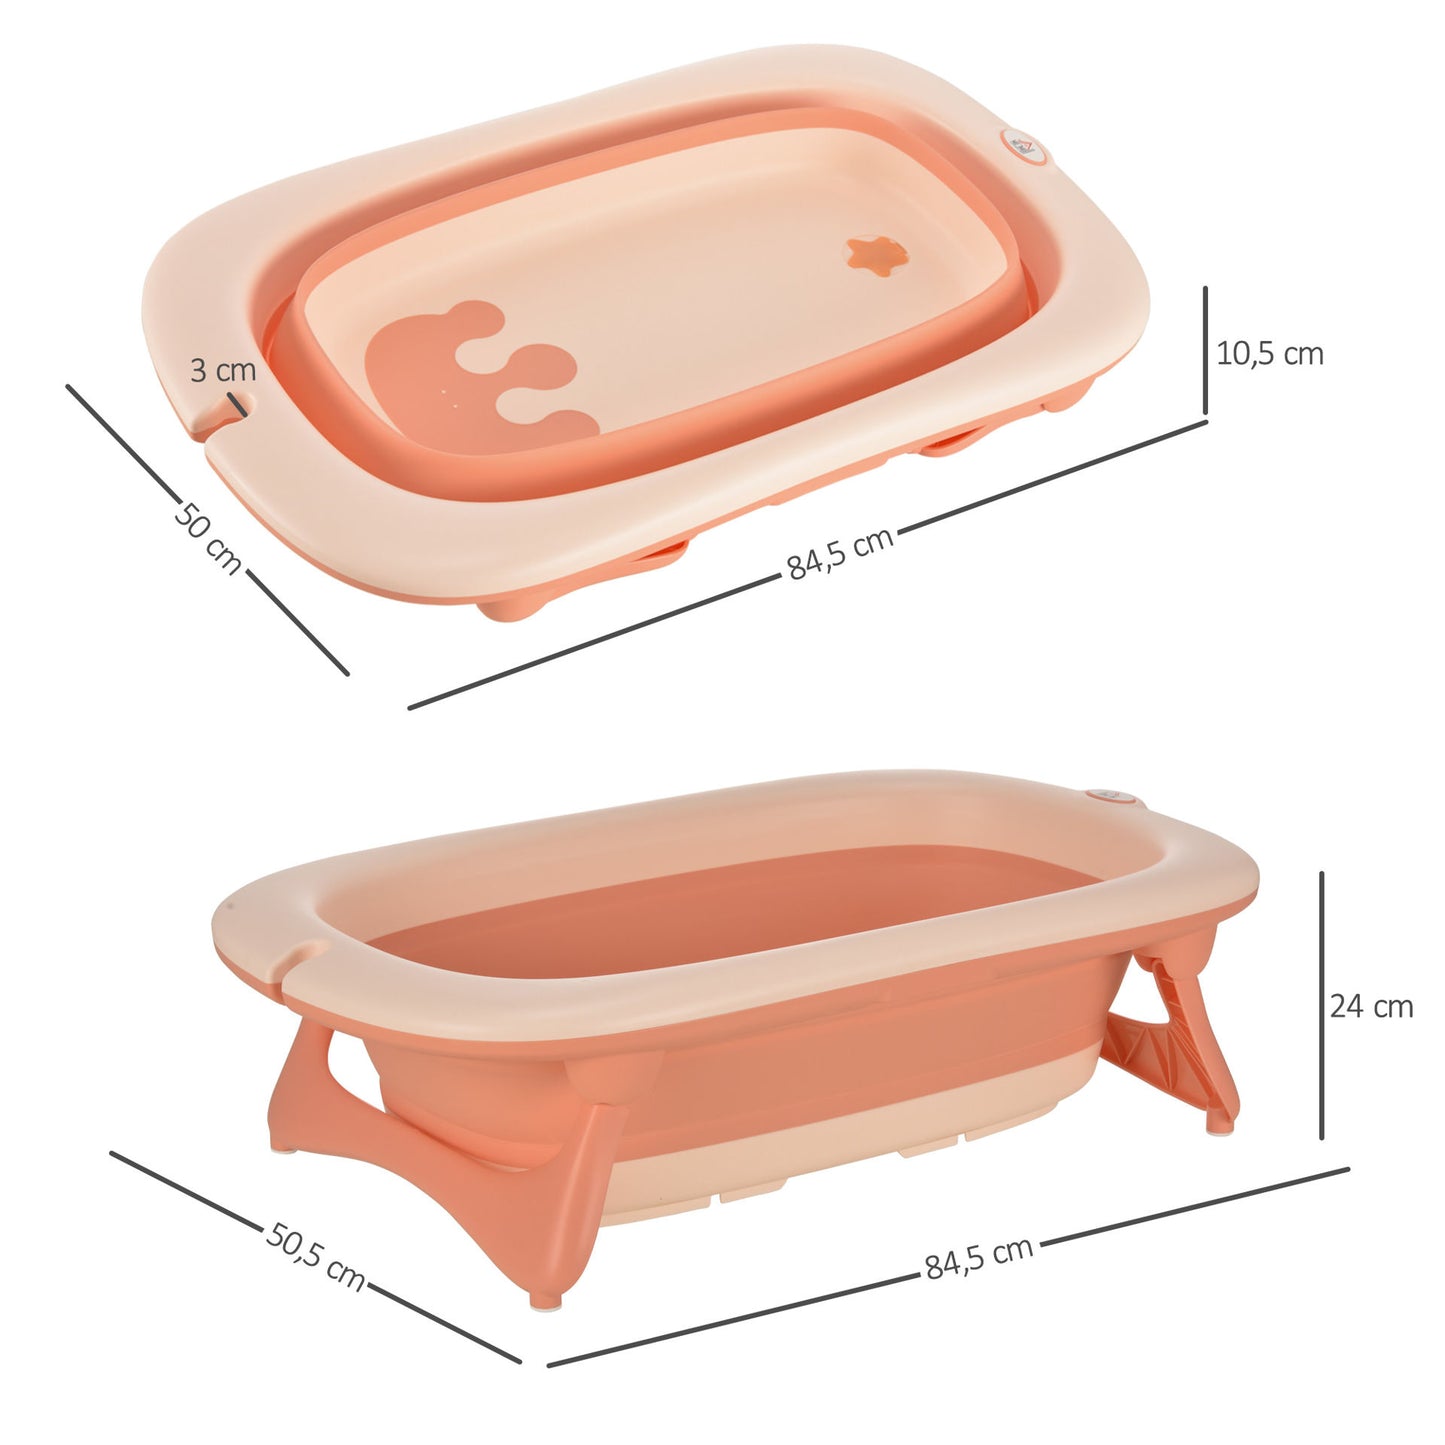 Nancy's Allemand Ergonomic Baby Bath - Pink - Pe, Tpe - 33.26 cm x 19.88 cm x 4.13 cm